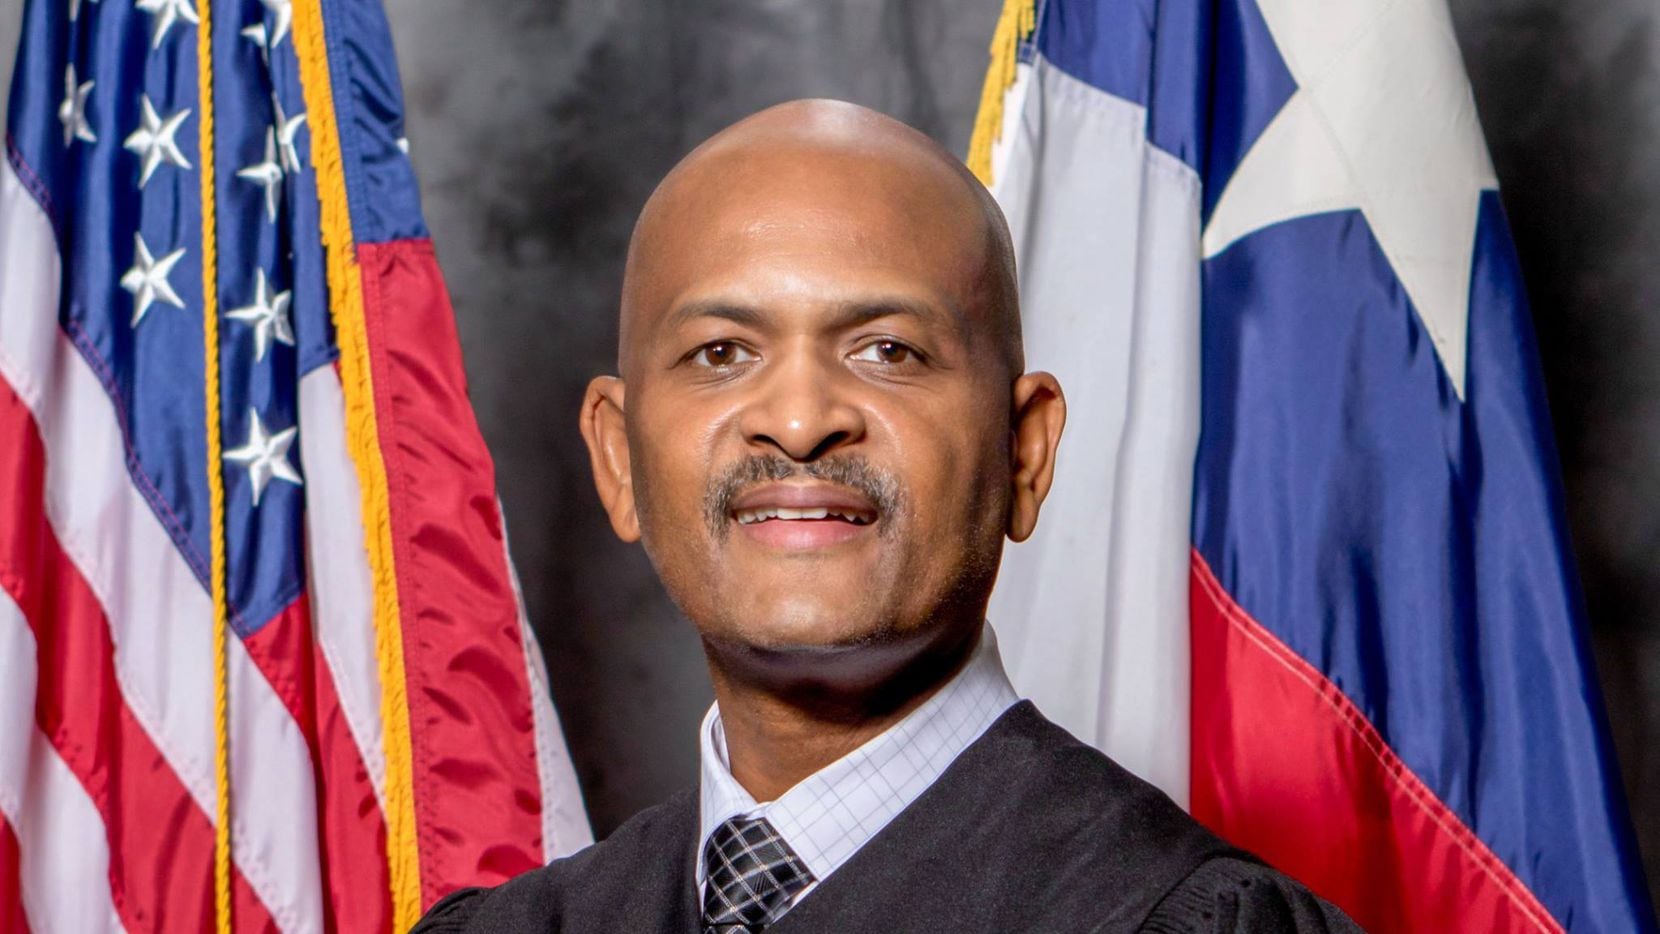 Judge Robert Johnson